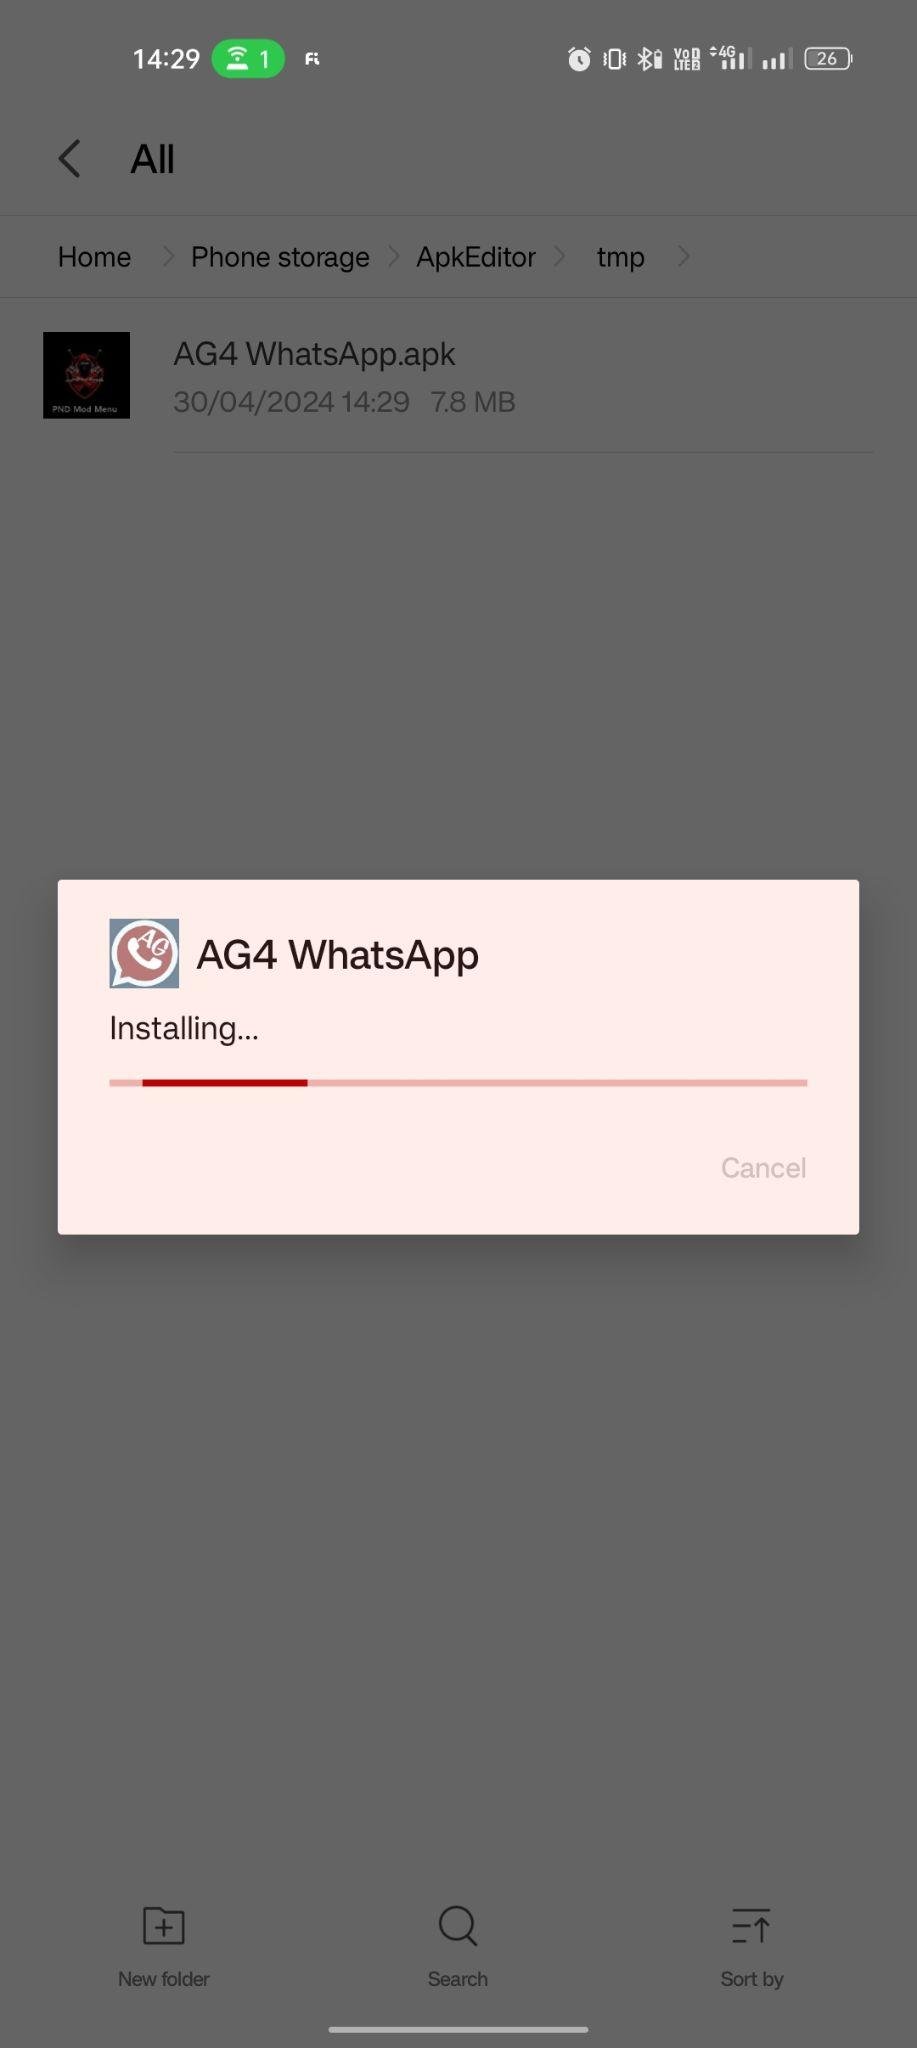 AG4 WhatsApp apk installing